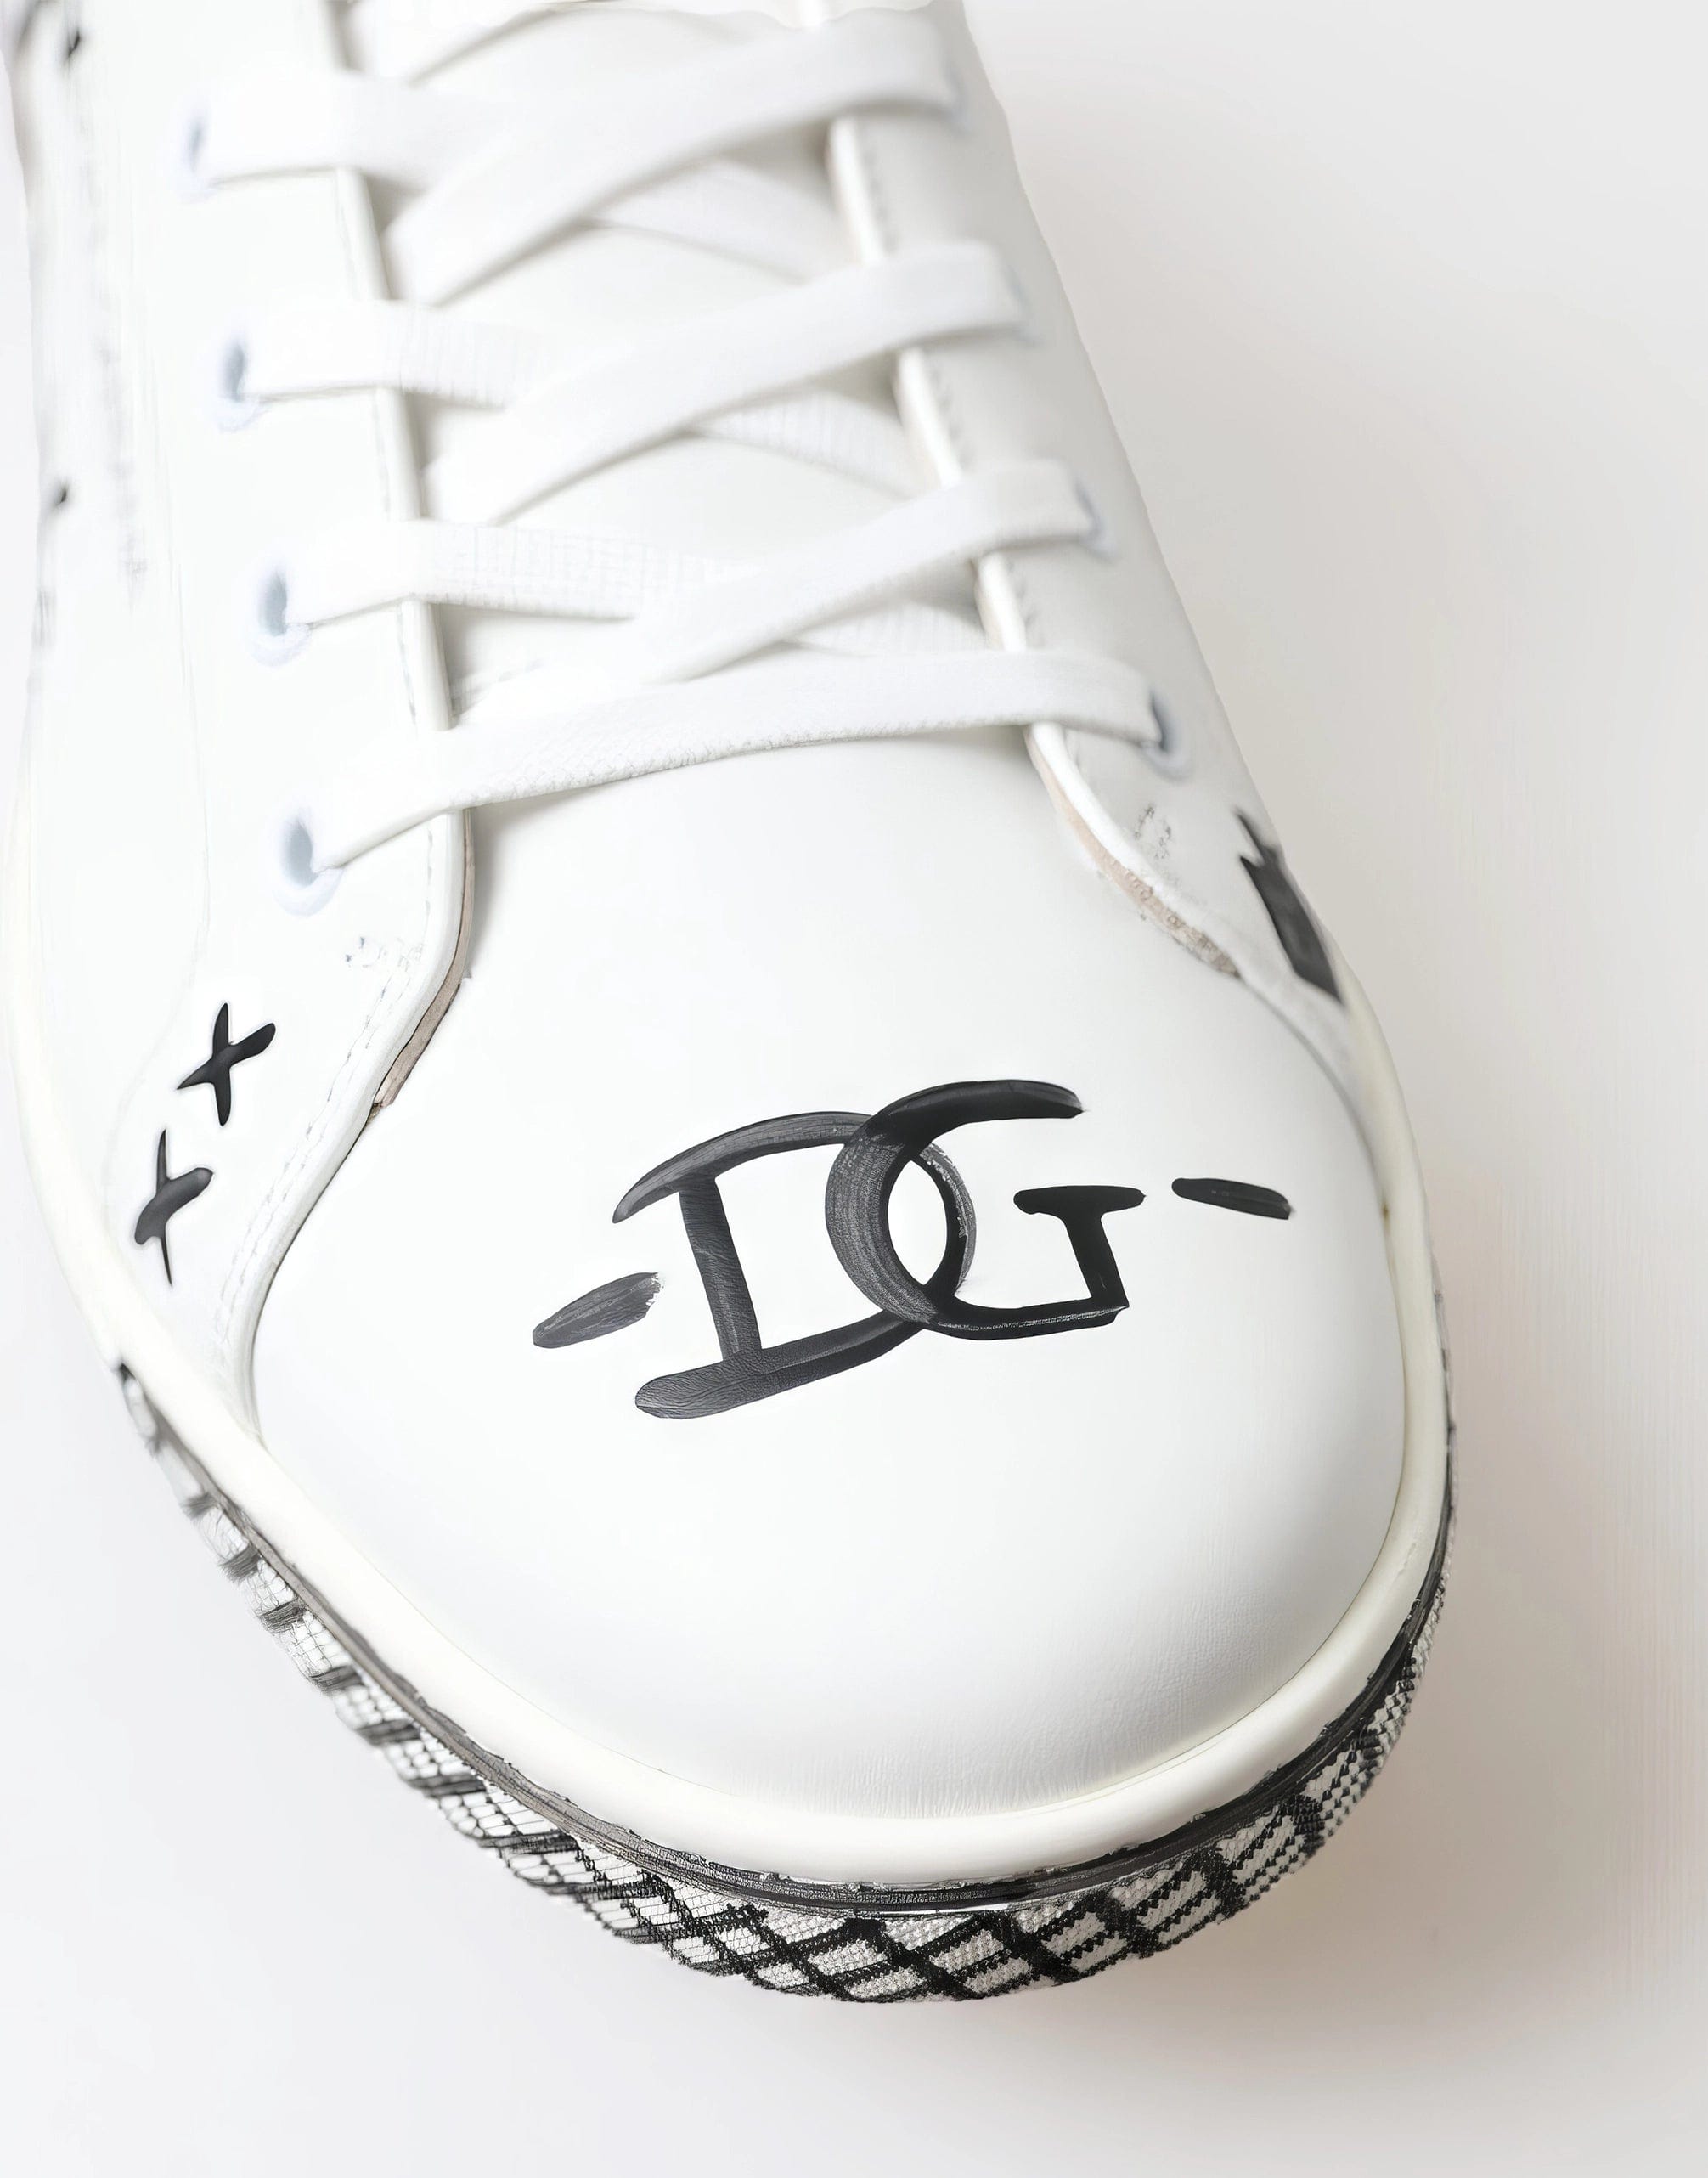 Dolce & Gabbana Custom Hand-Painted Sneakers